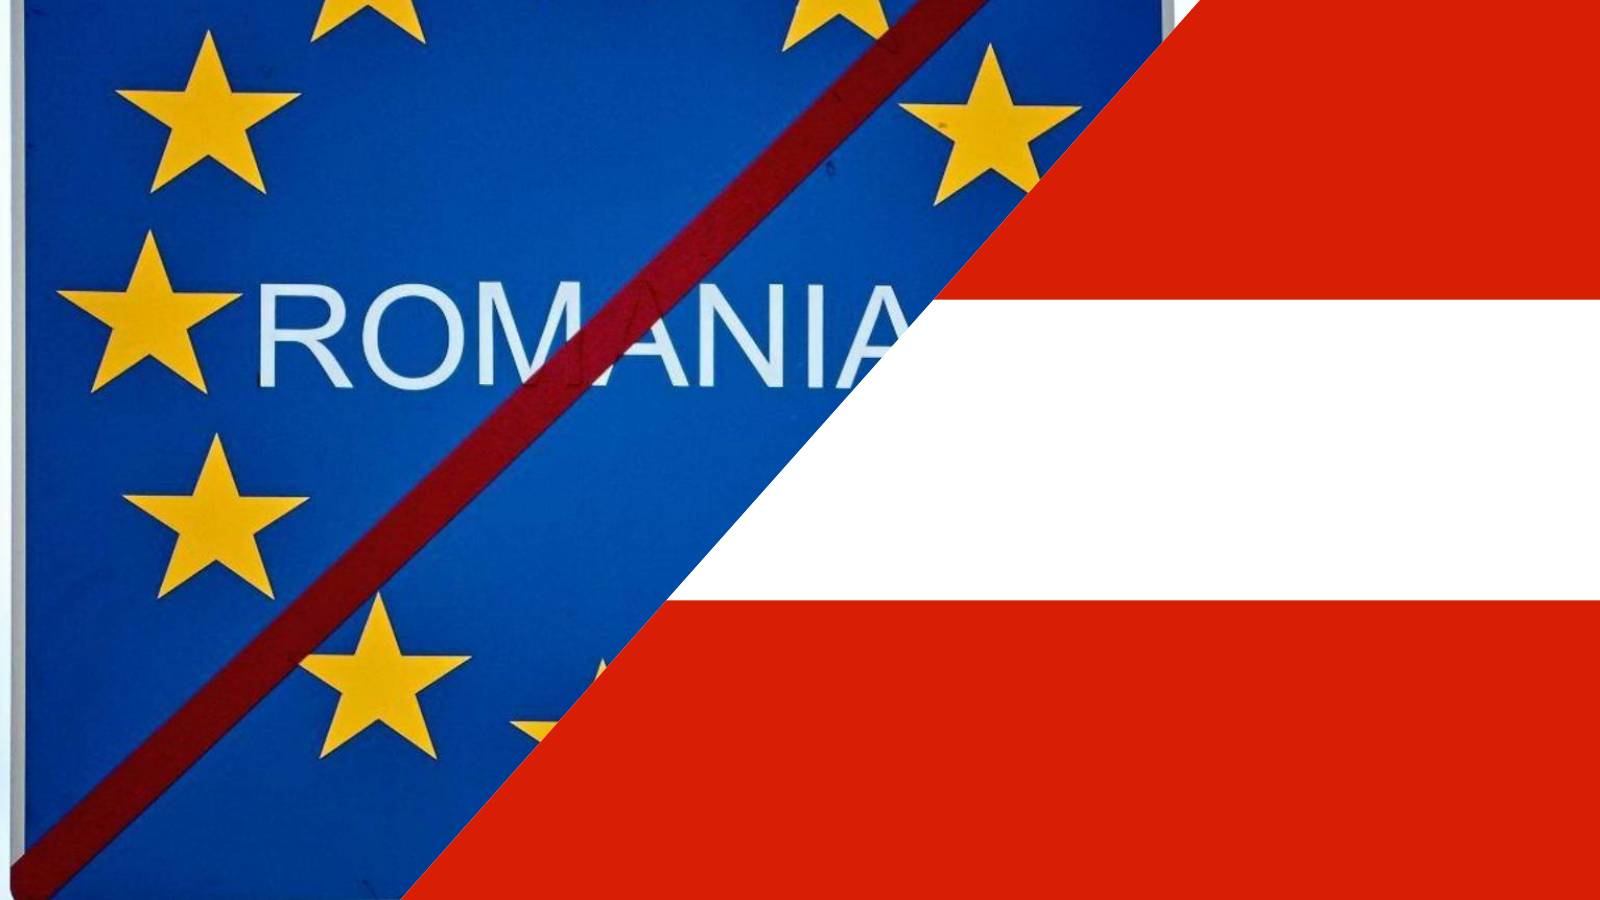 Austria Shares the Vice-Chancellor's Announcement Reason for Blocking Romania's Schengen Accession